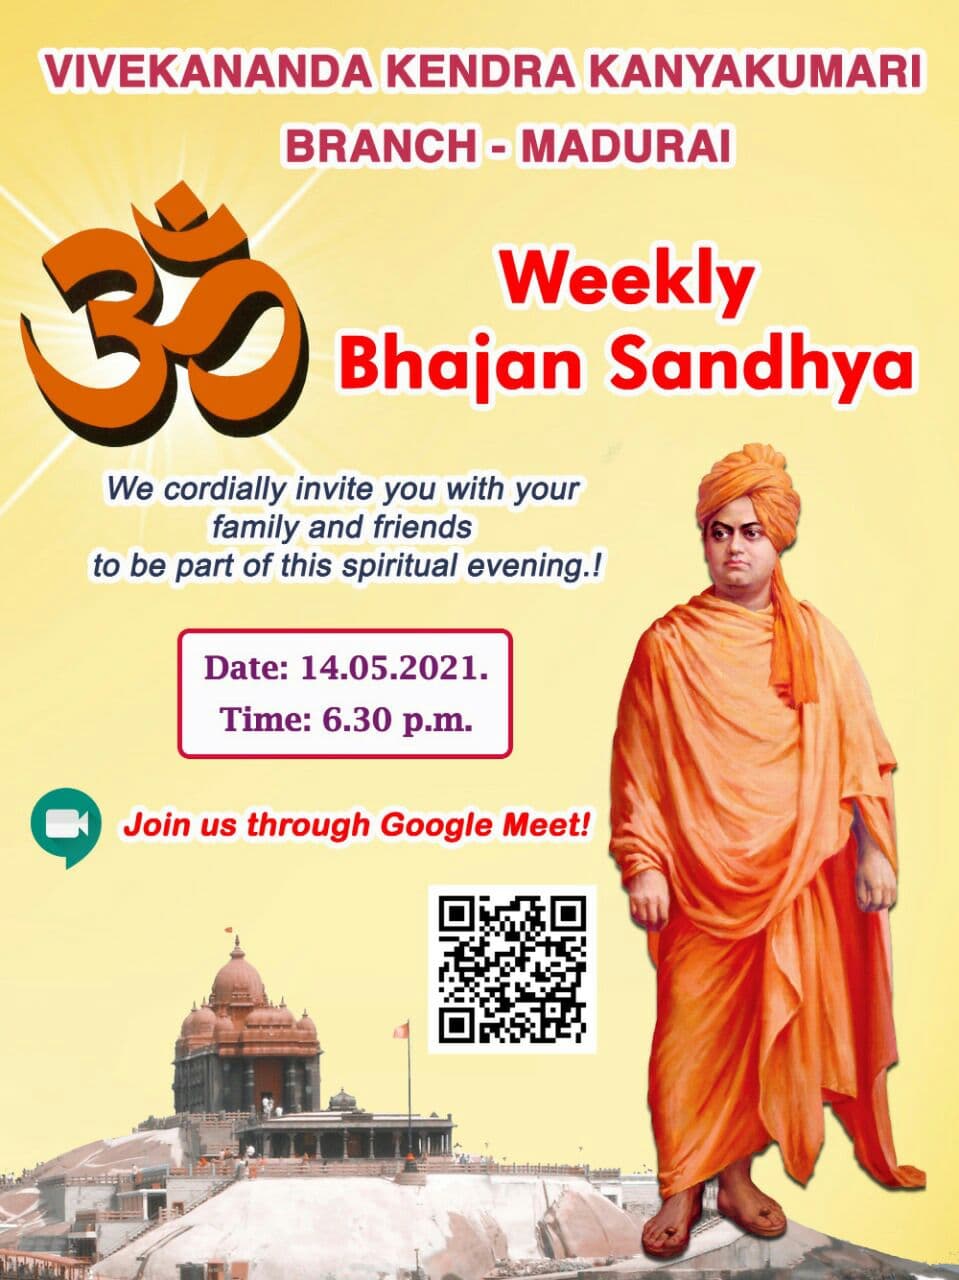 Weekly Bhajan Sandhya - Madurai